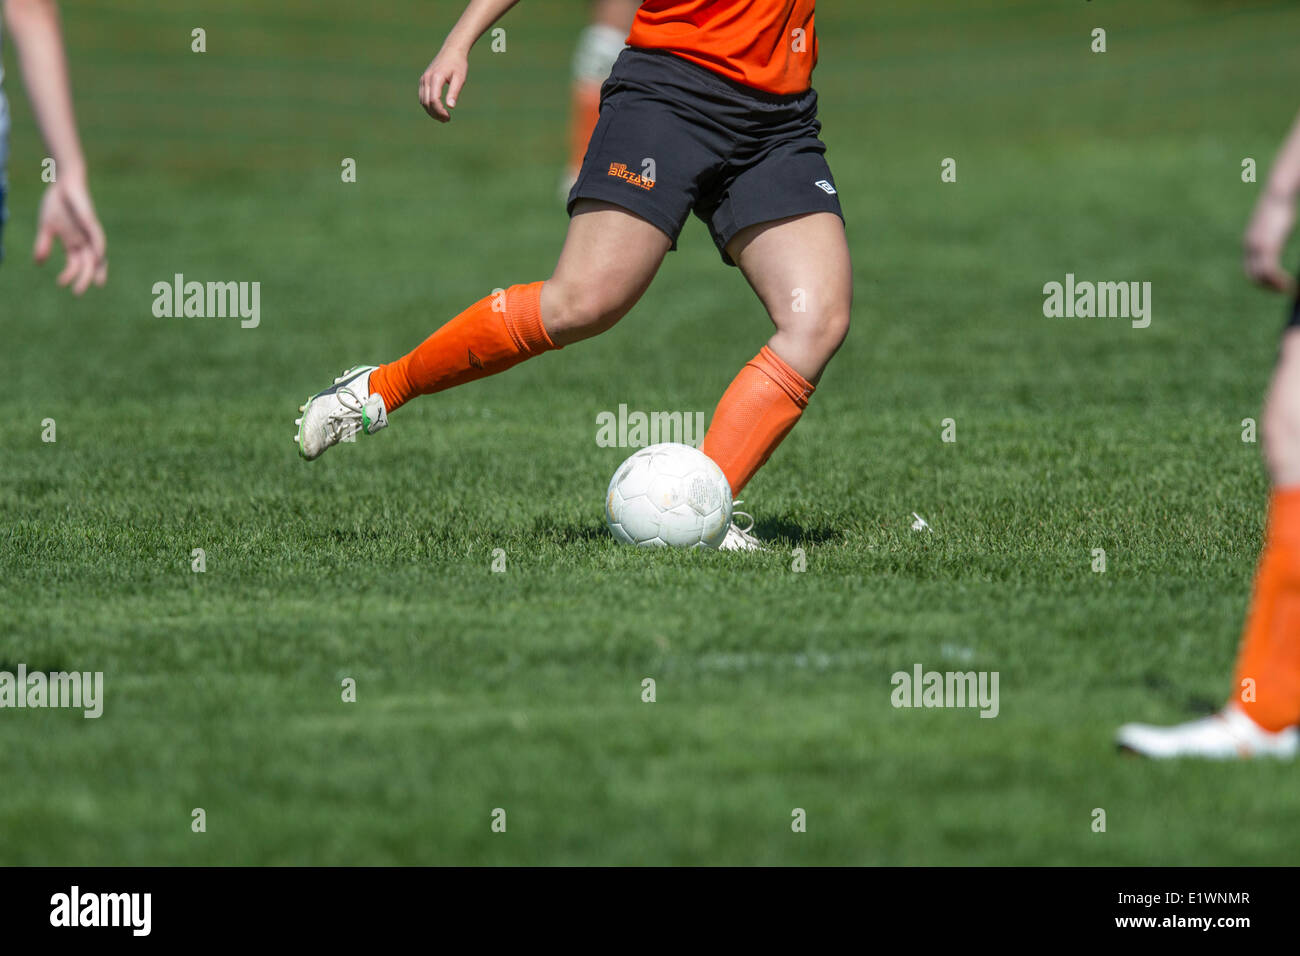 Young girl kicking the ball while playing soccer. Calgary, Alberta, Canada Stock Photo